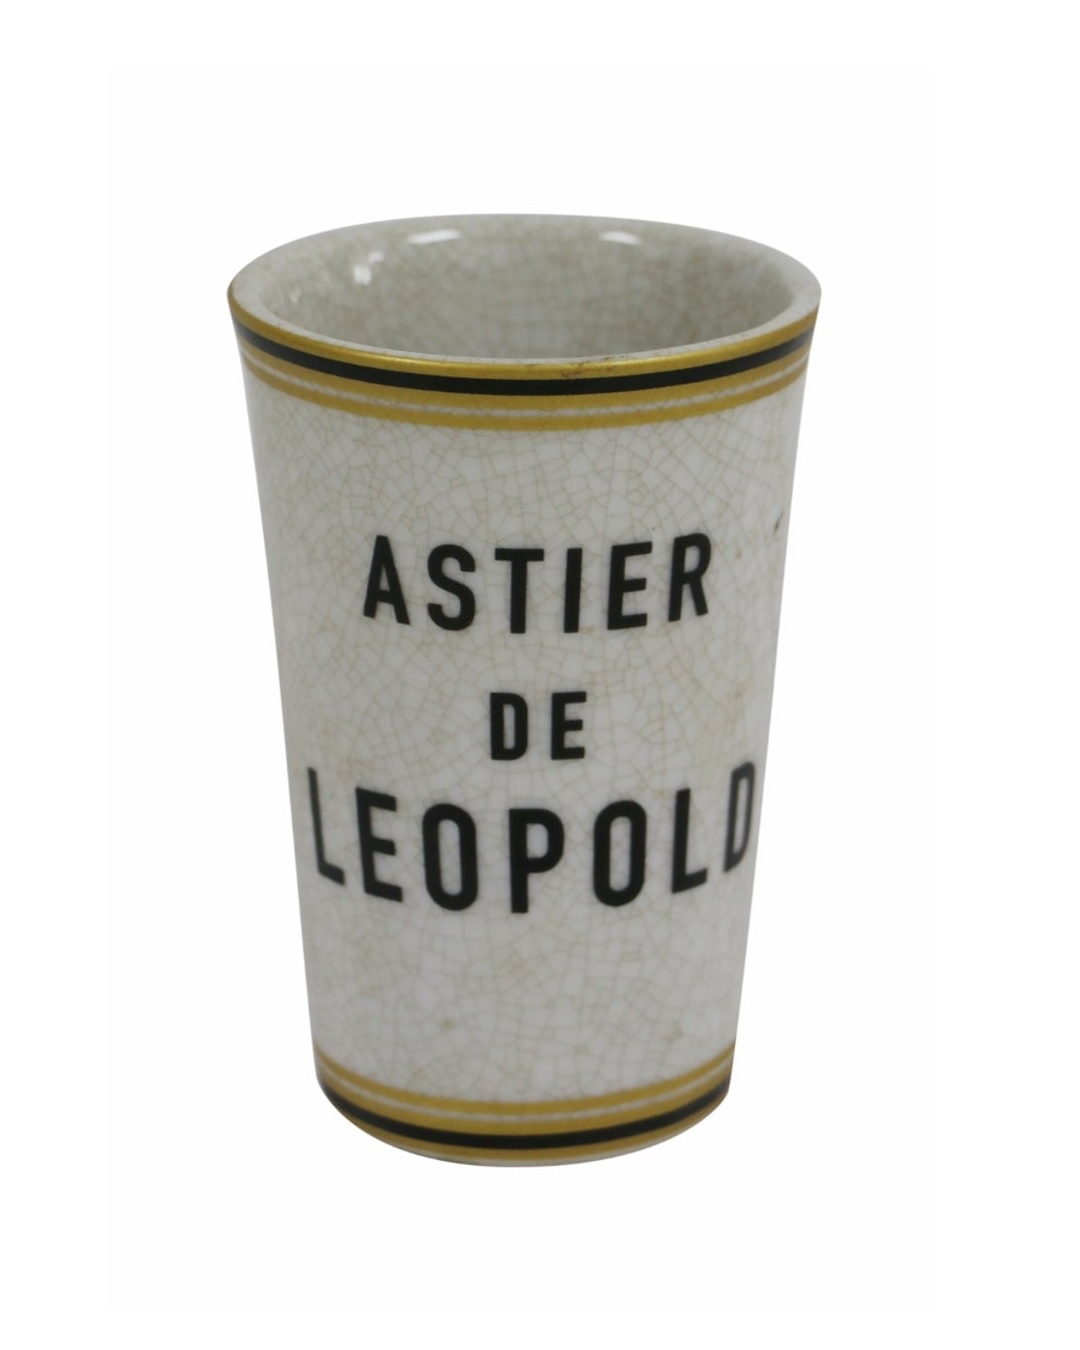 Astier de leopald cups